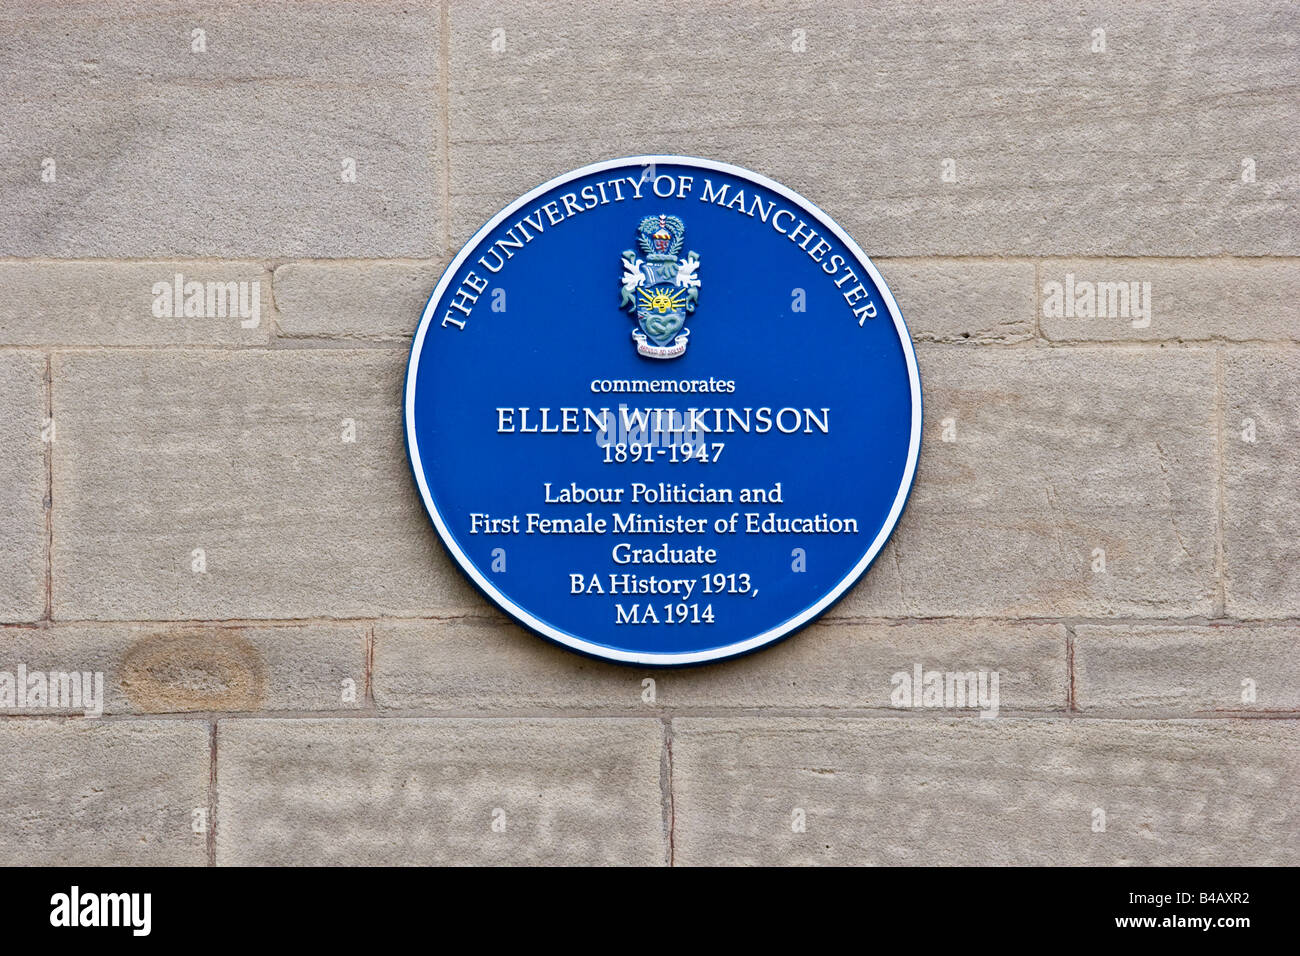 Blue plaque in Old Quadrangle of The University of Manchester, UK,   commemmorating Ellen Wilkinson (1891-1947) Stock Photo